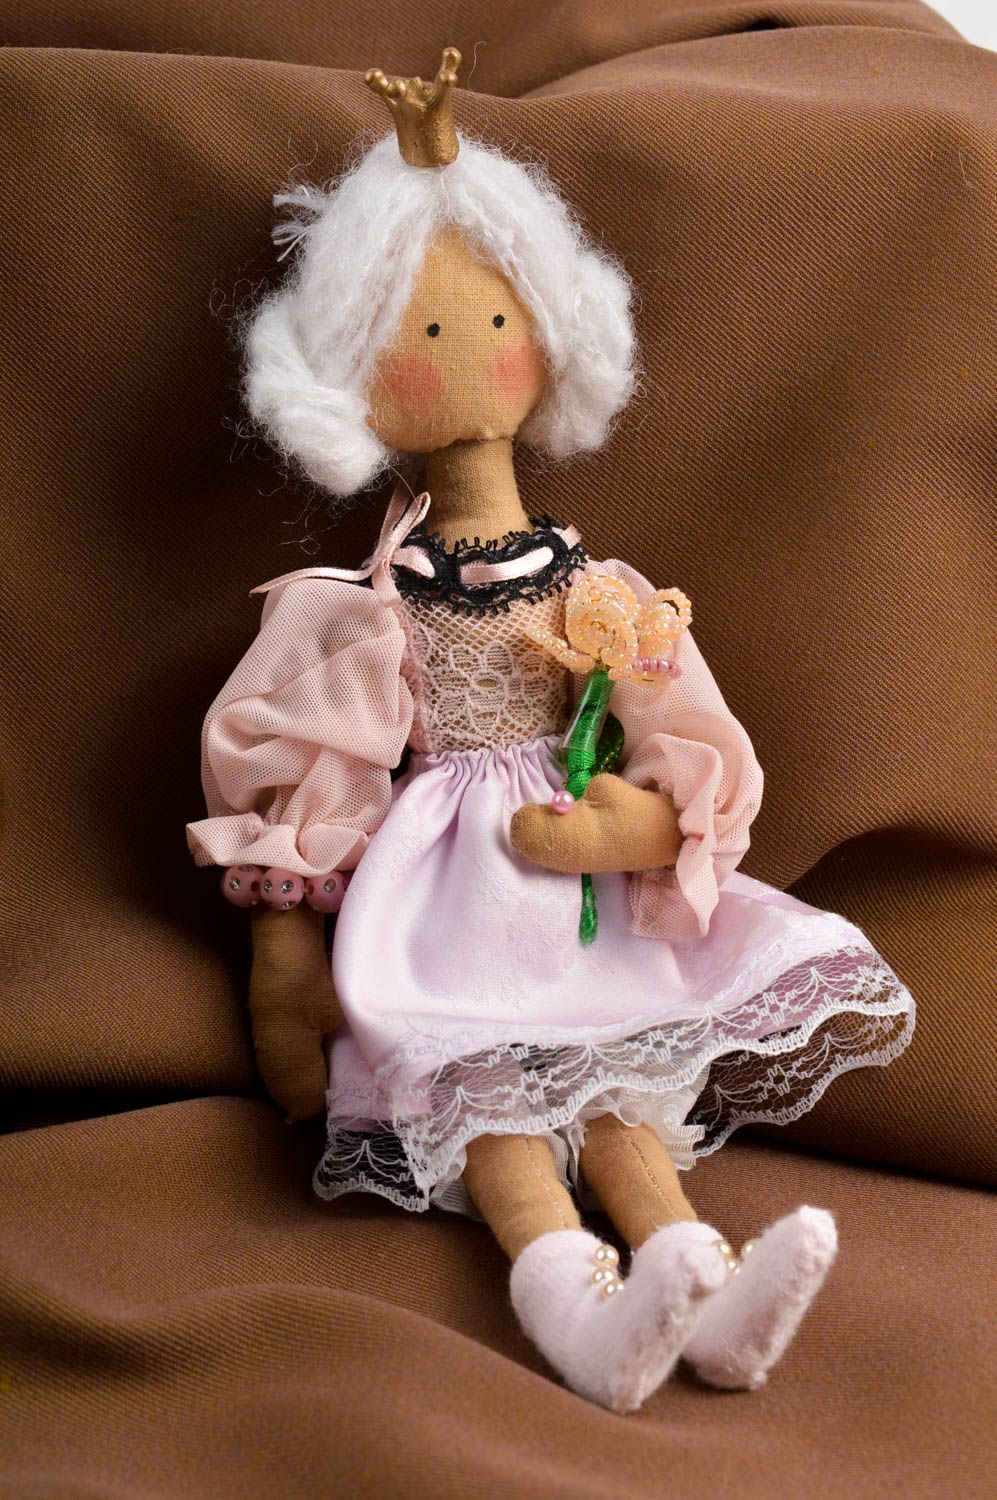 Handmade doll princess stuffed toy designer childrens toy decoration ideas photo 1